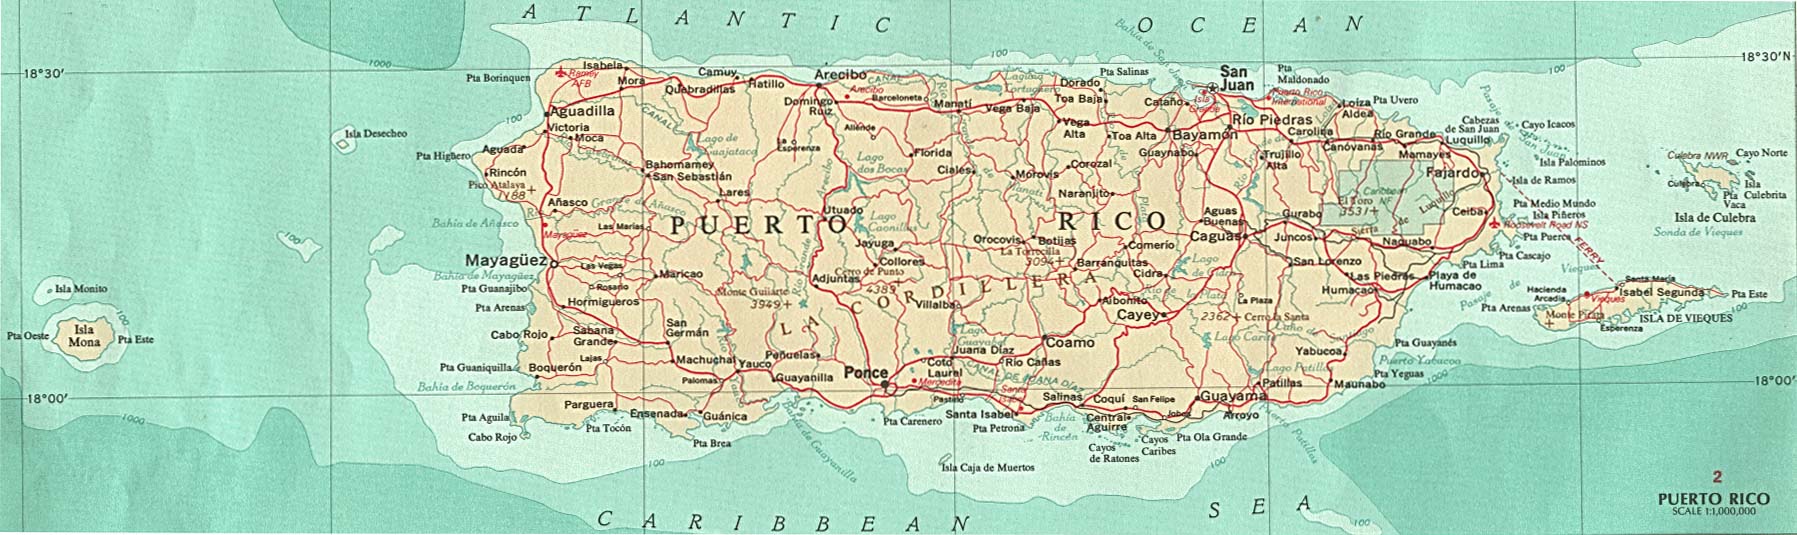 puerto_rico maps.jpg